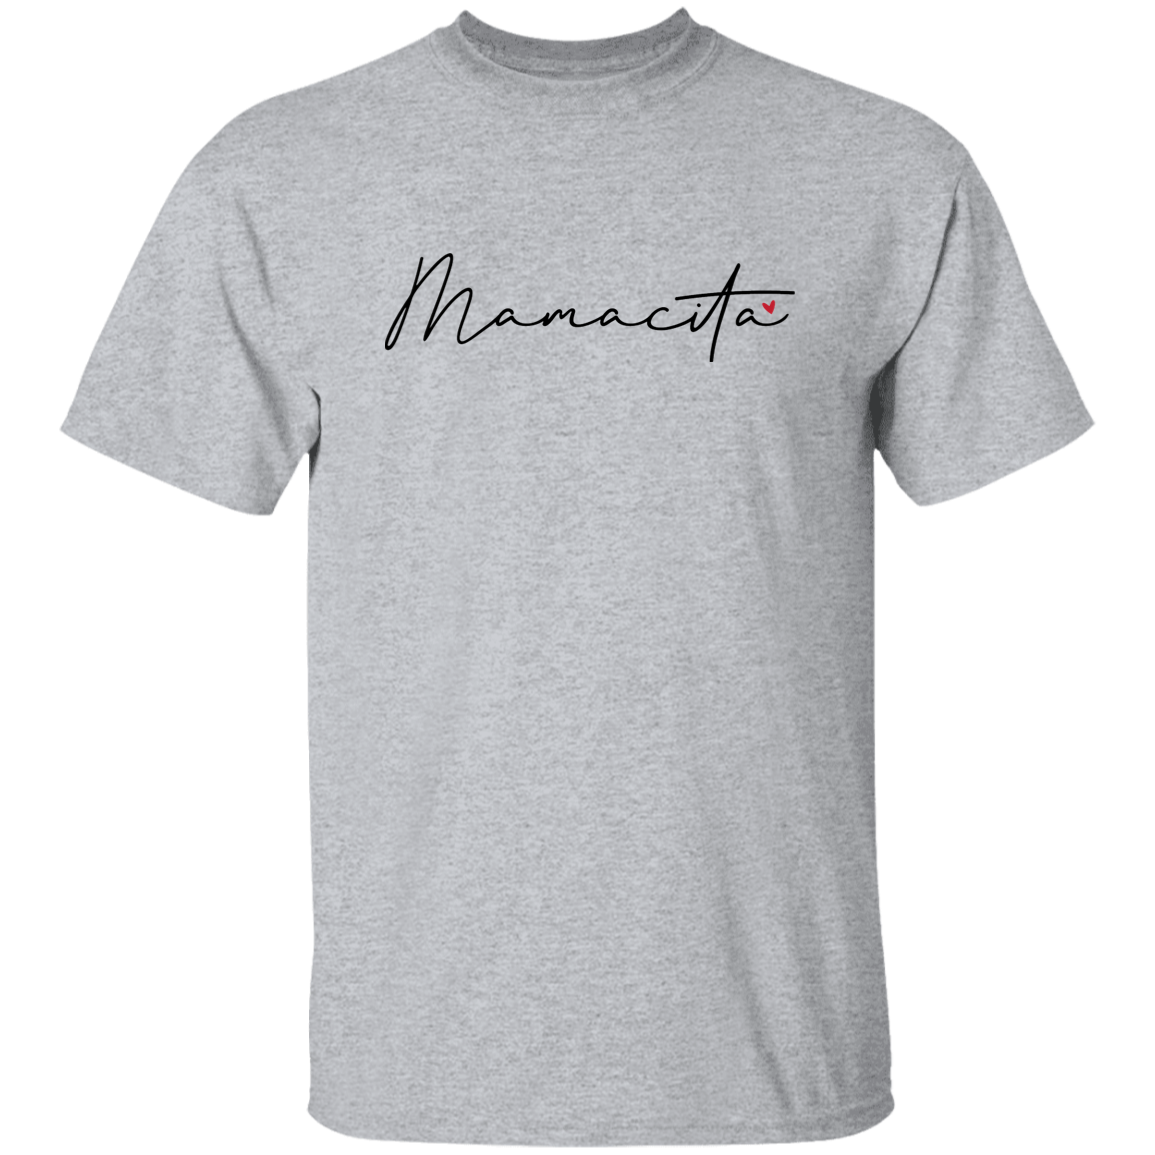 Mamacita 5.3 oz. T-Shirt